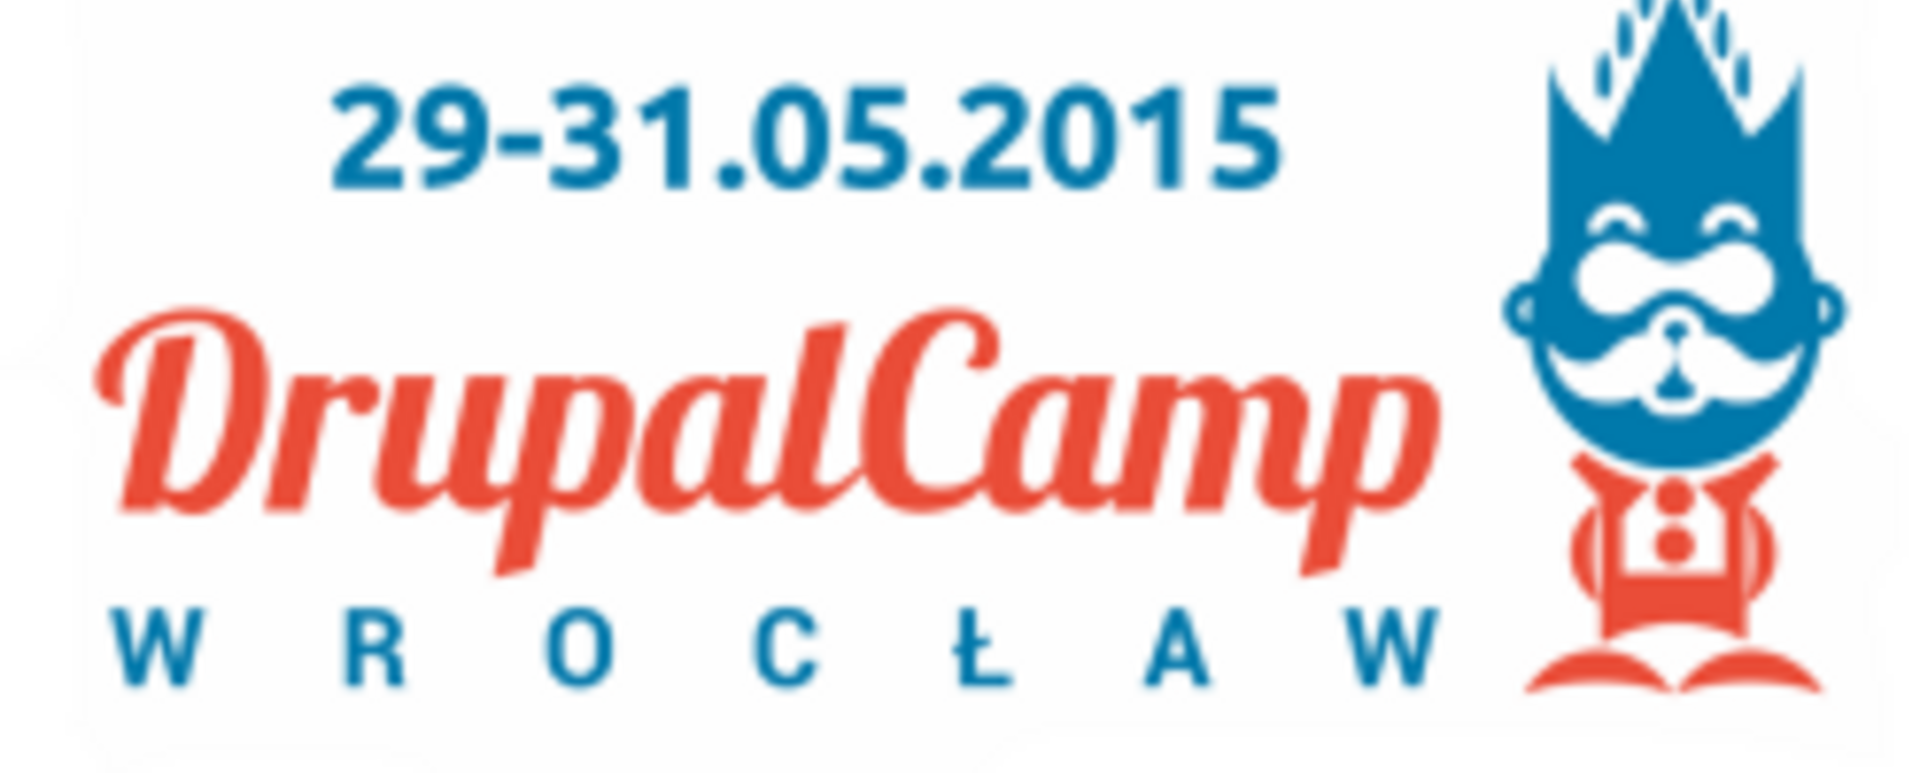 Drupal Camp Wrocław już w maju